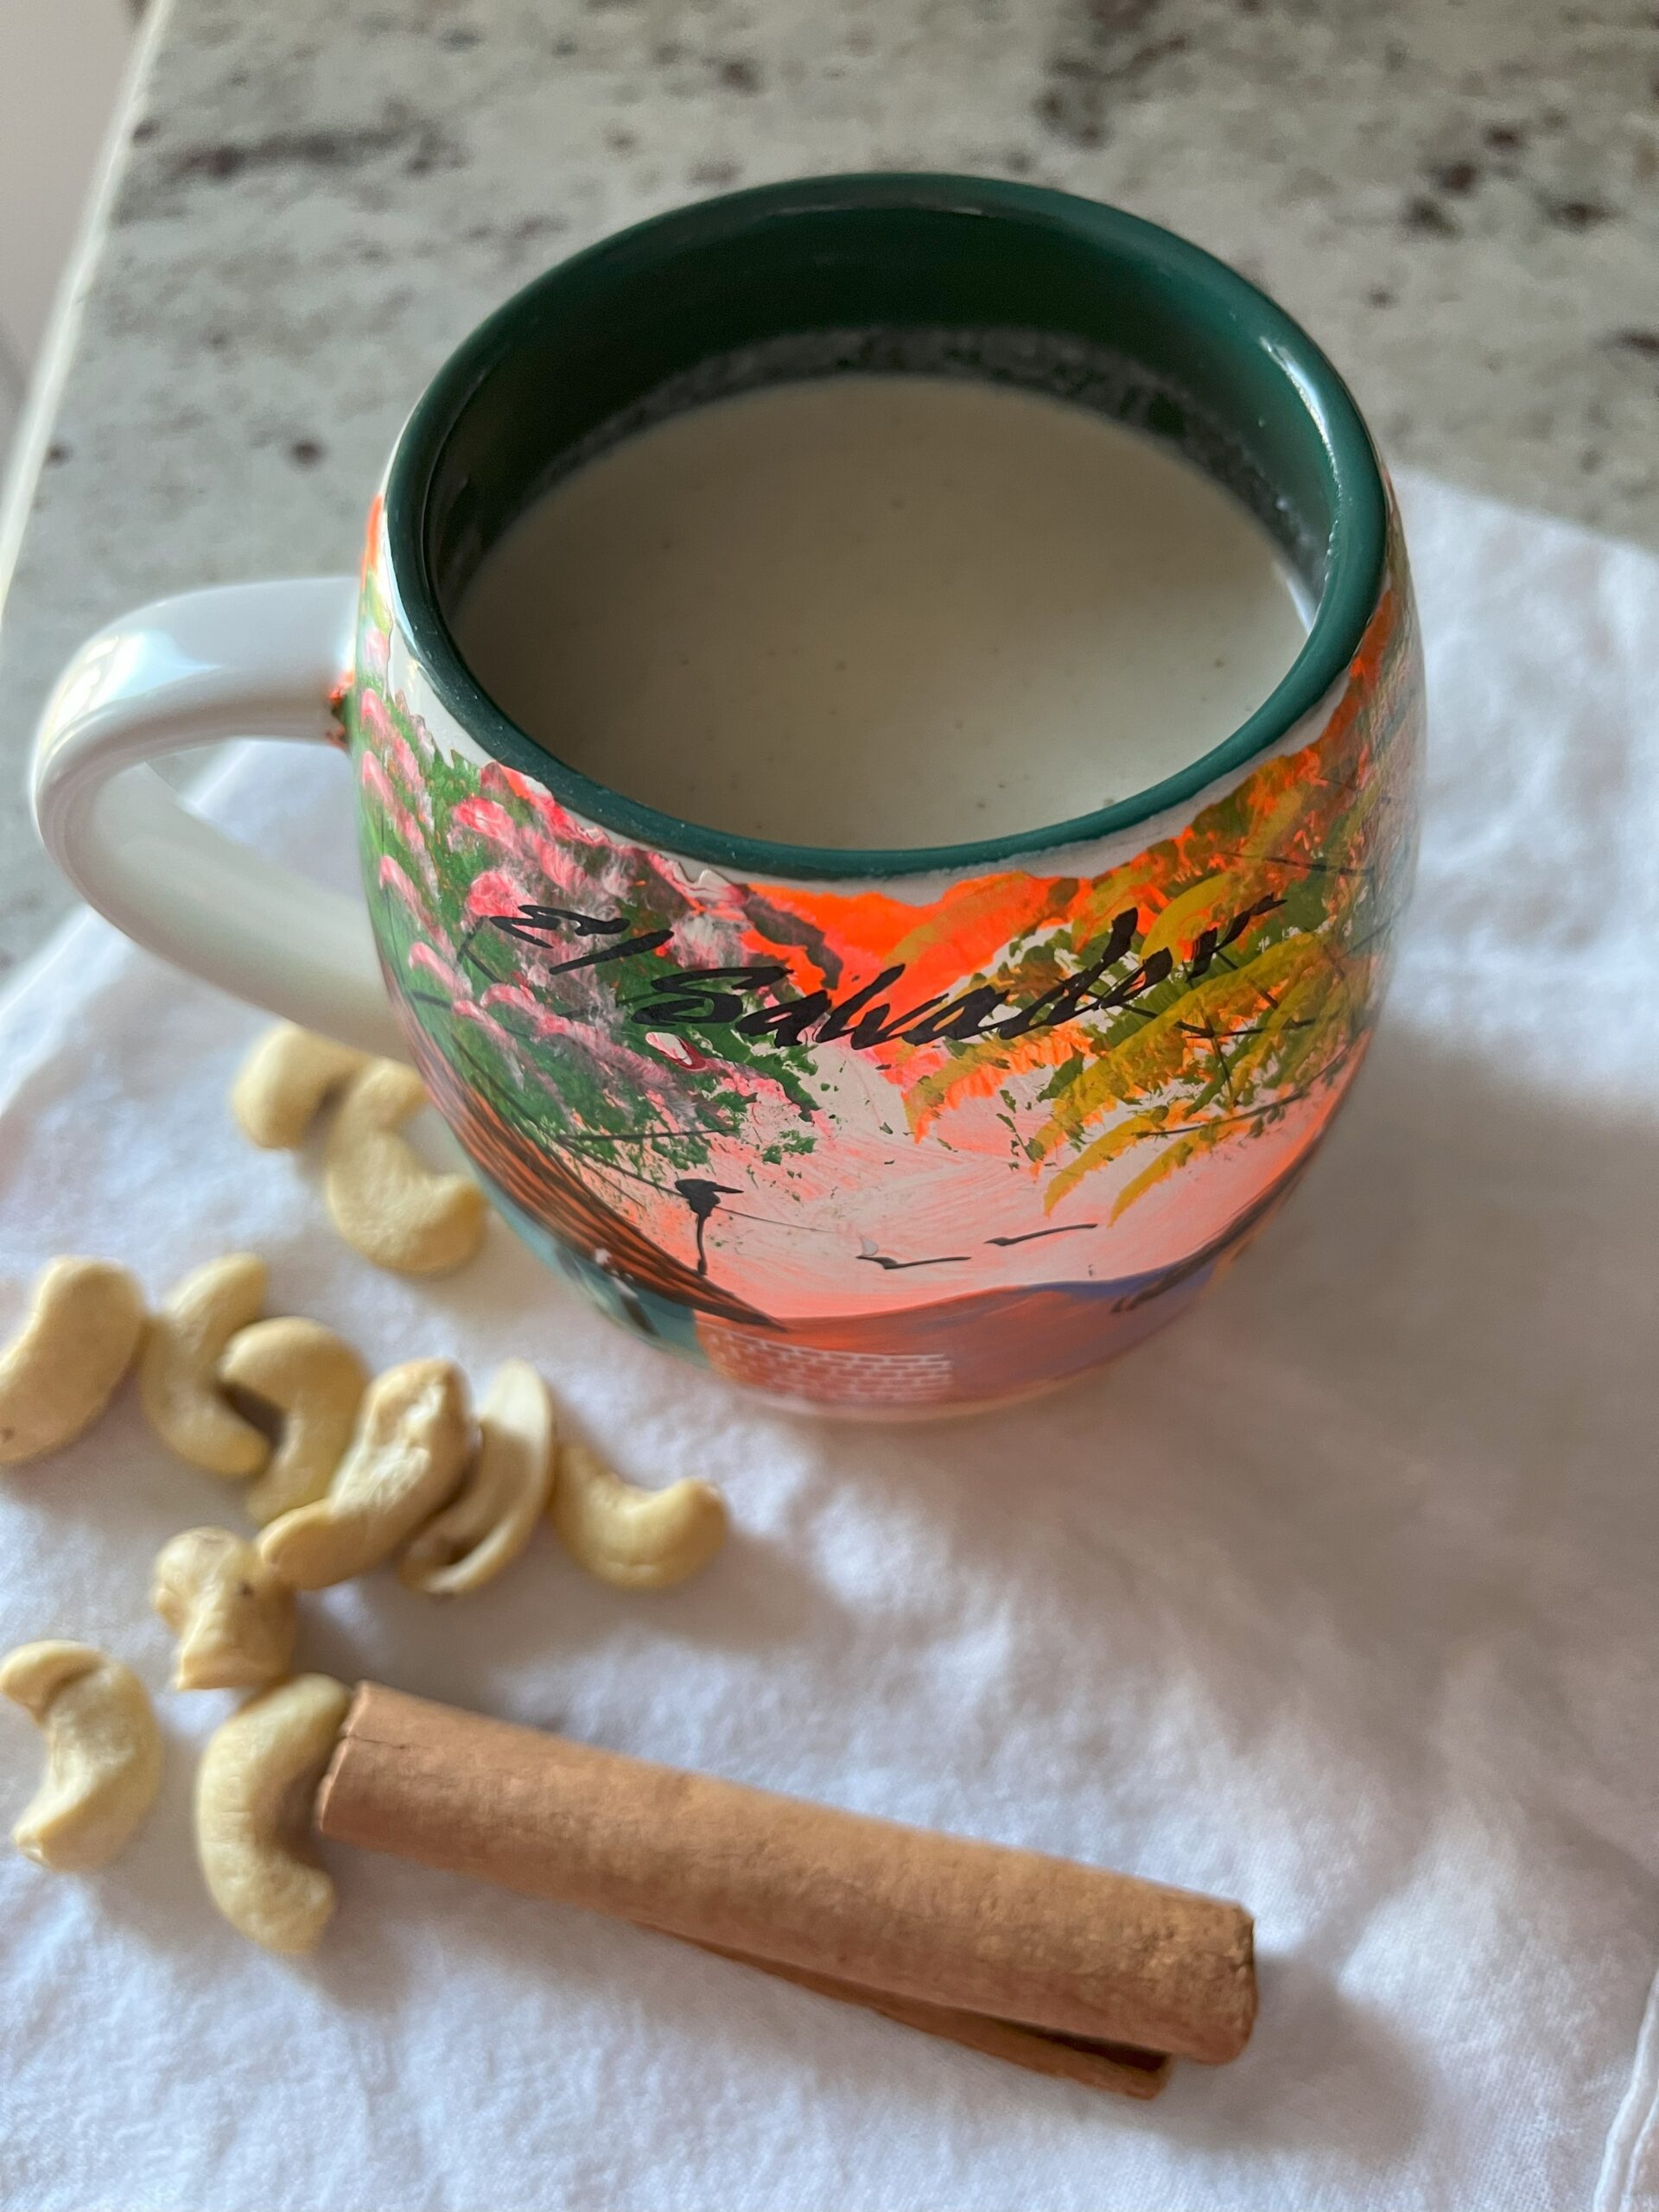 The easiest cashew drink (atol de semilla de maranon)